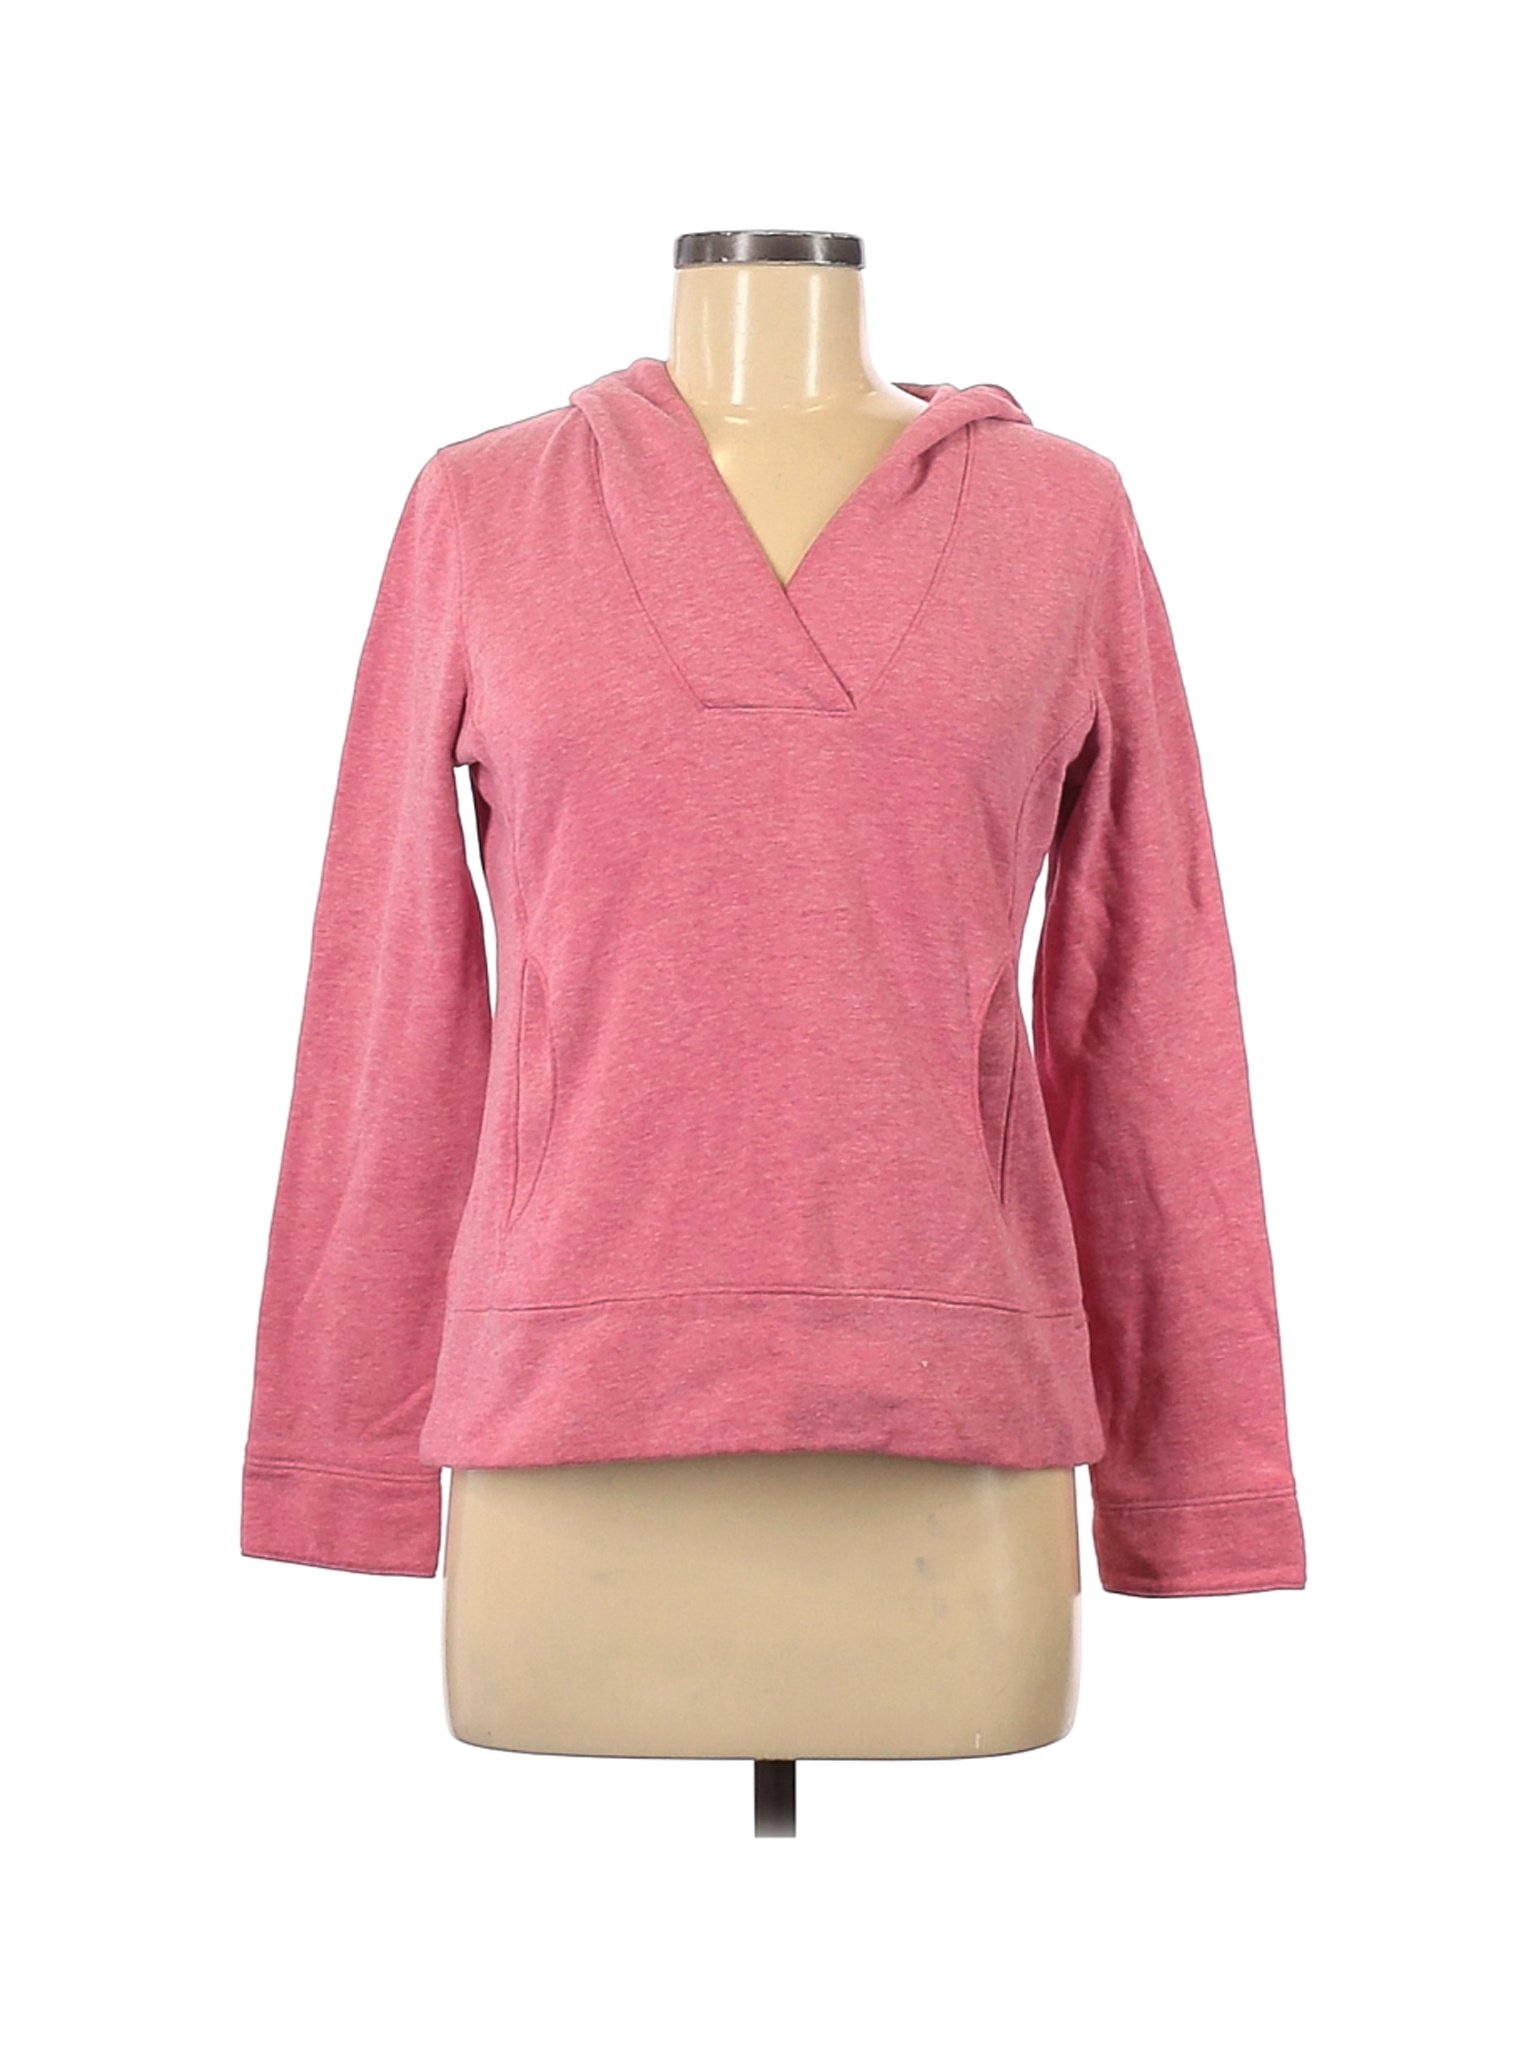 Tek Gear Women Pink Pullover Hoodie M | eBay